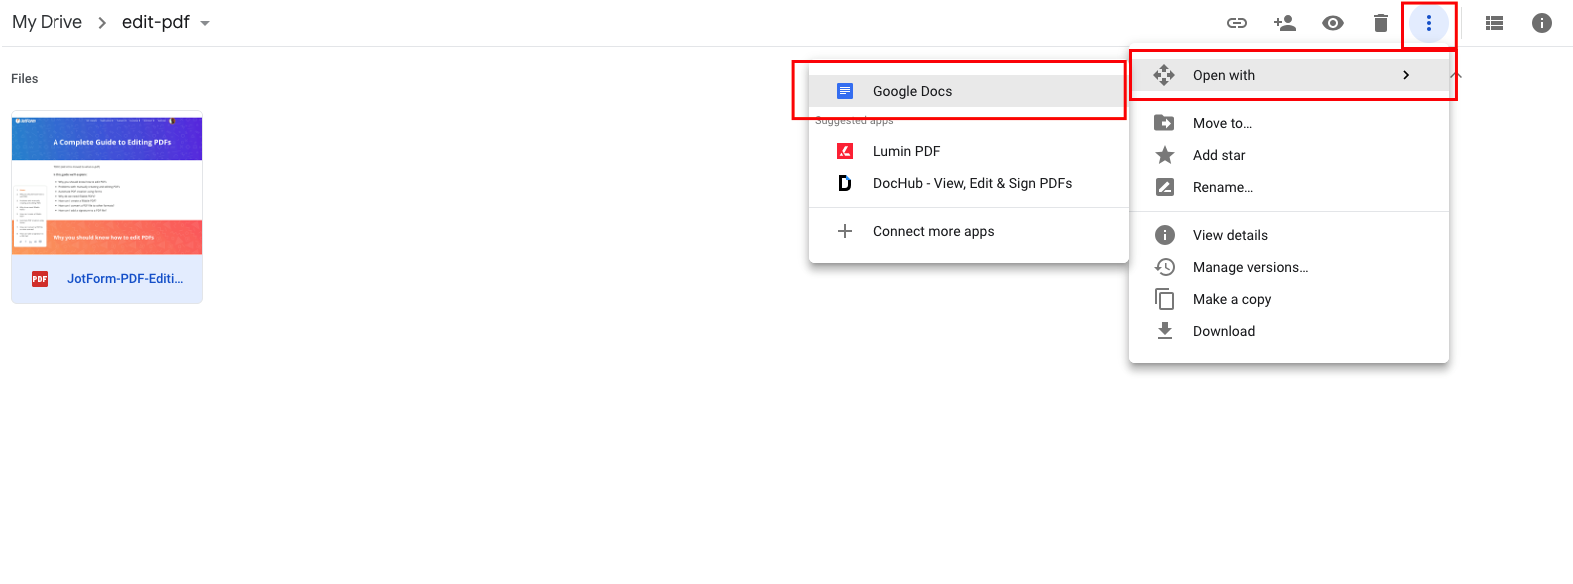 Edit PDF on Google Drive